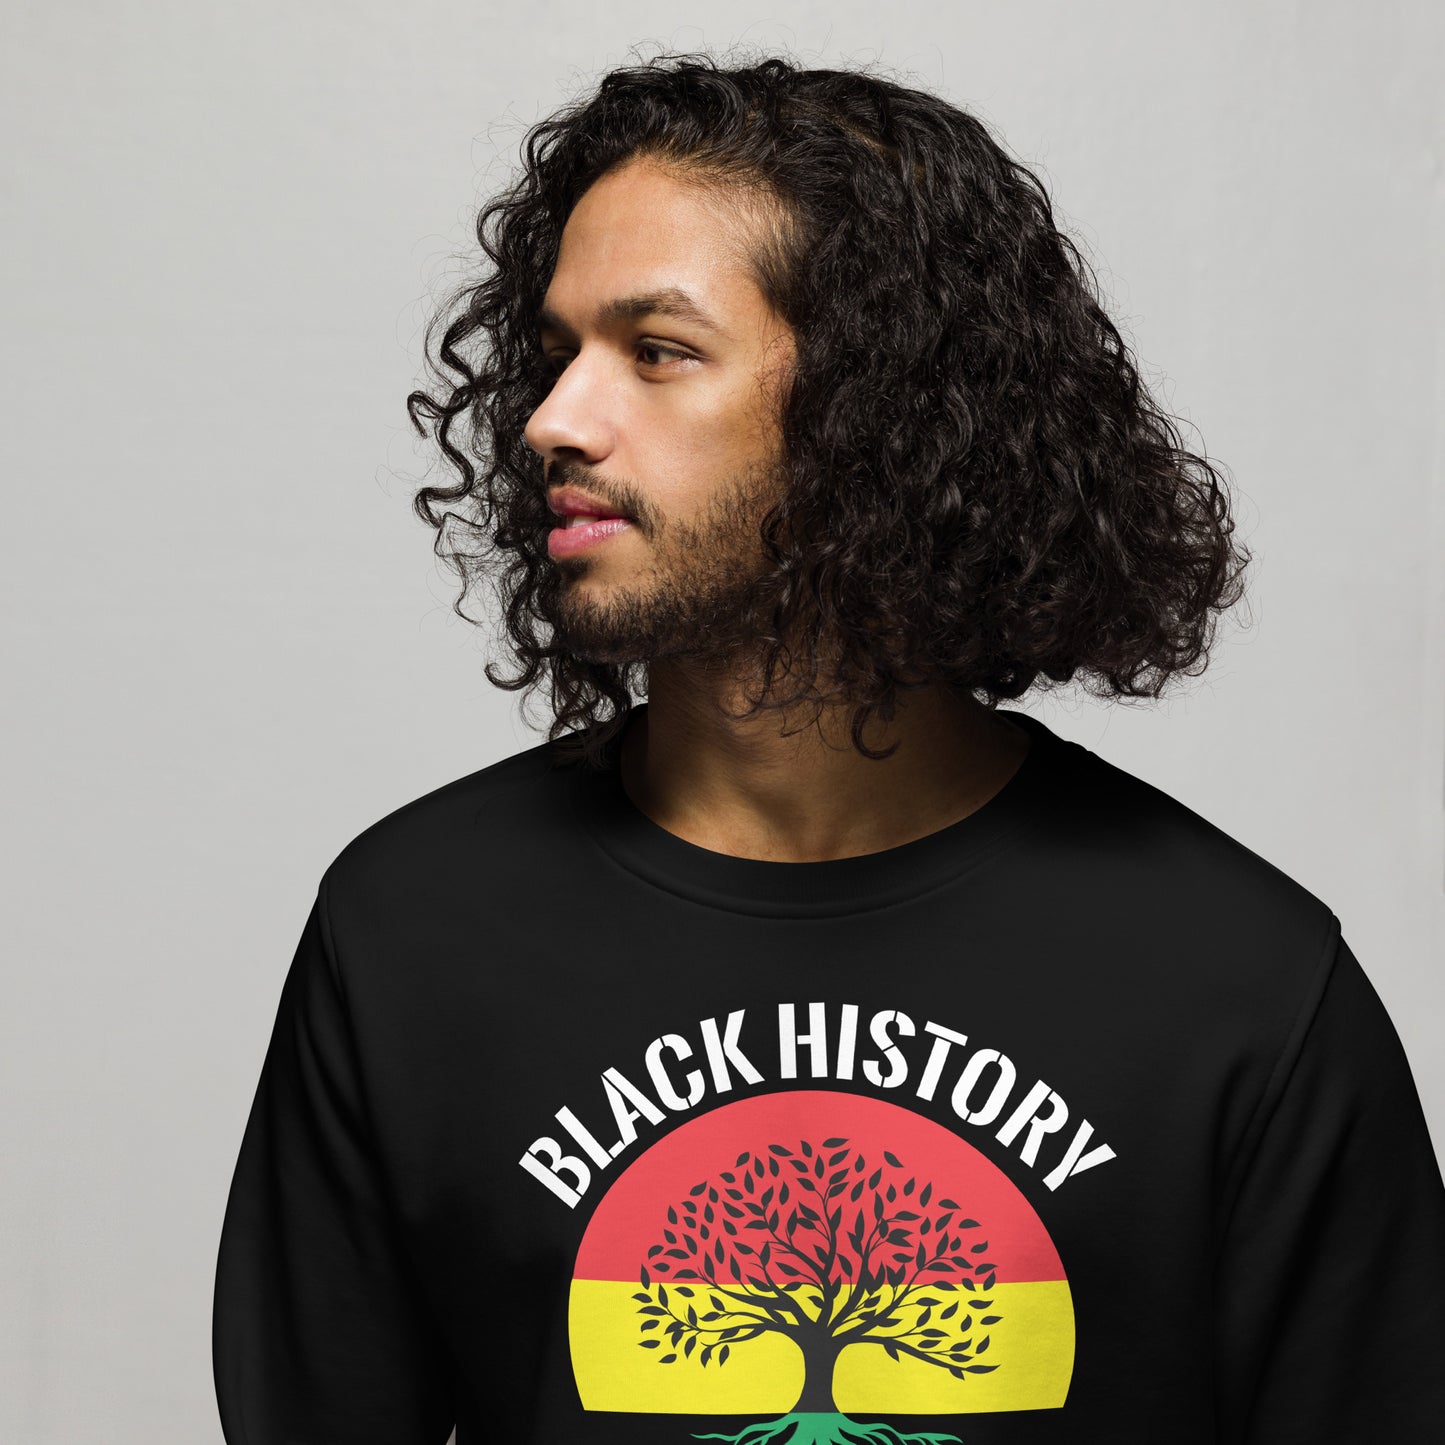 Unisex organic sweatshirt - Black History Remembering the Past Inspiring the Future